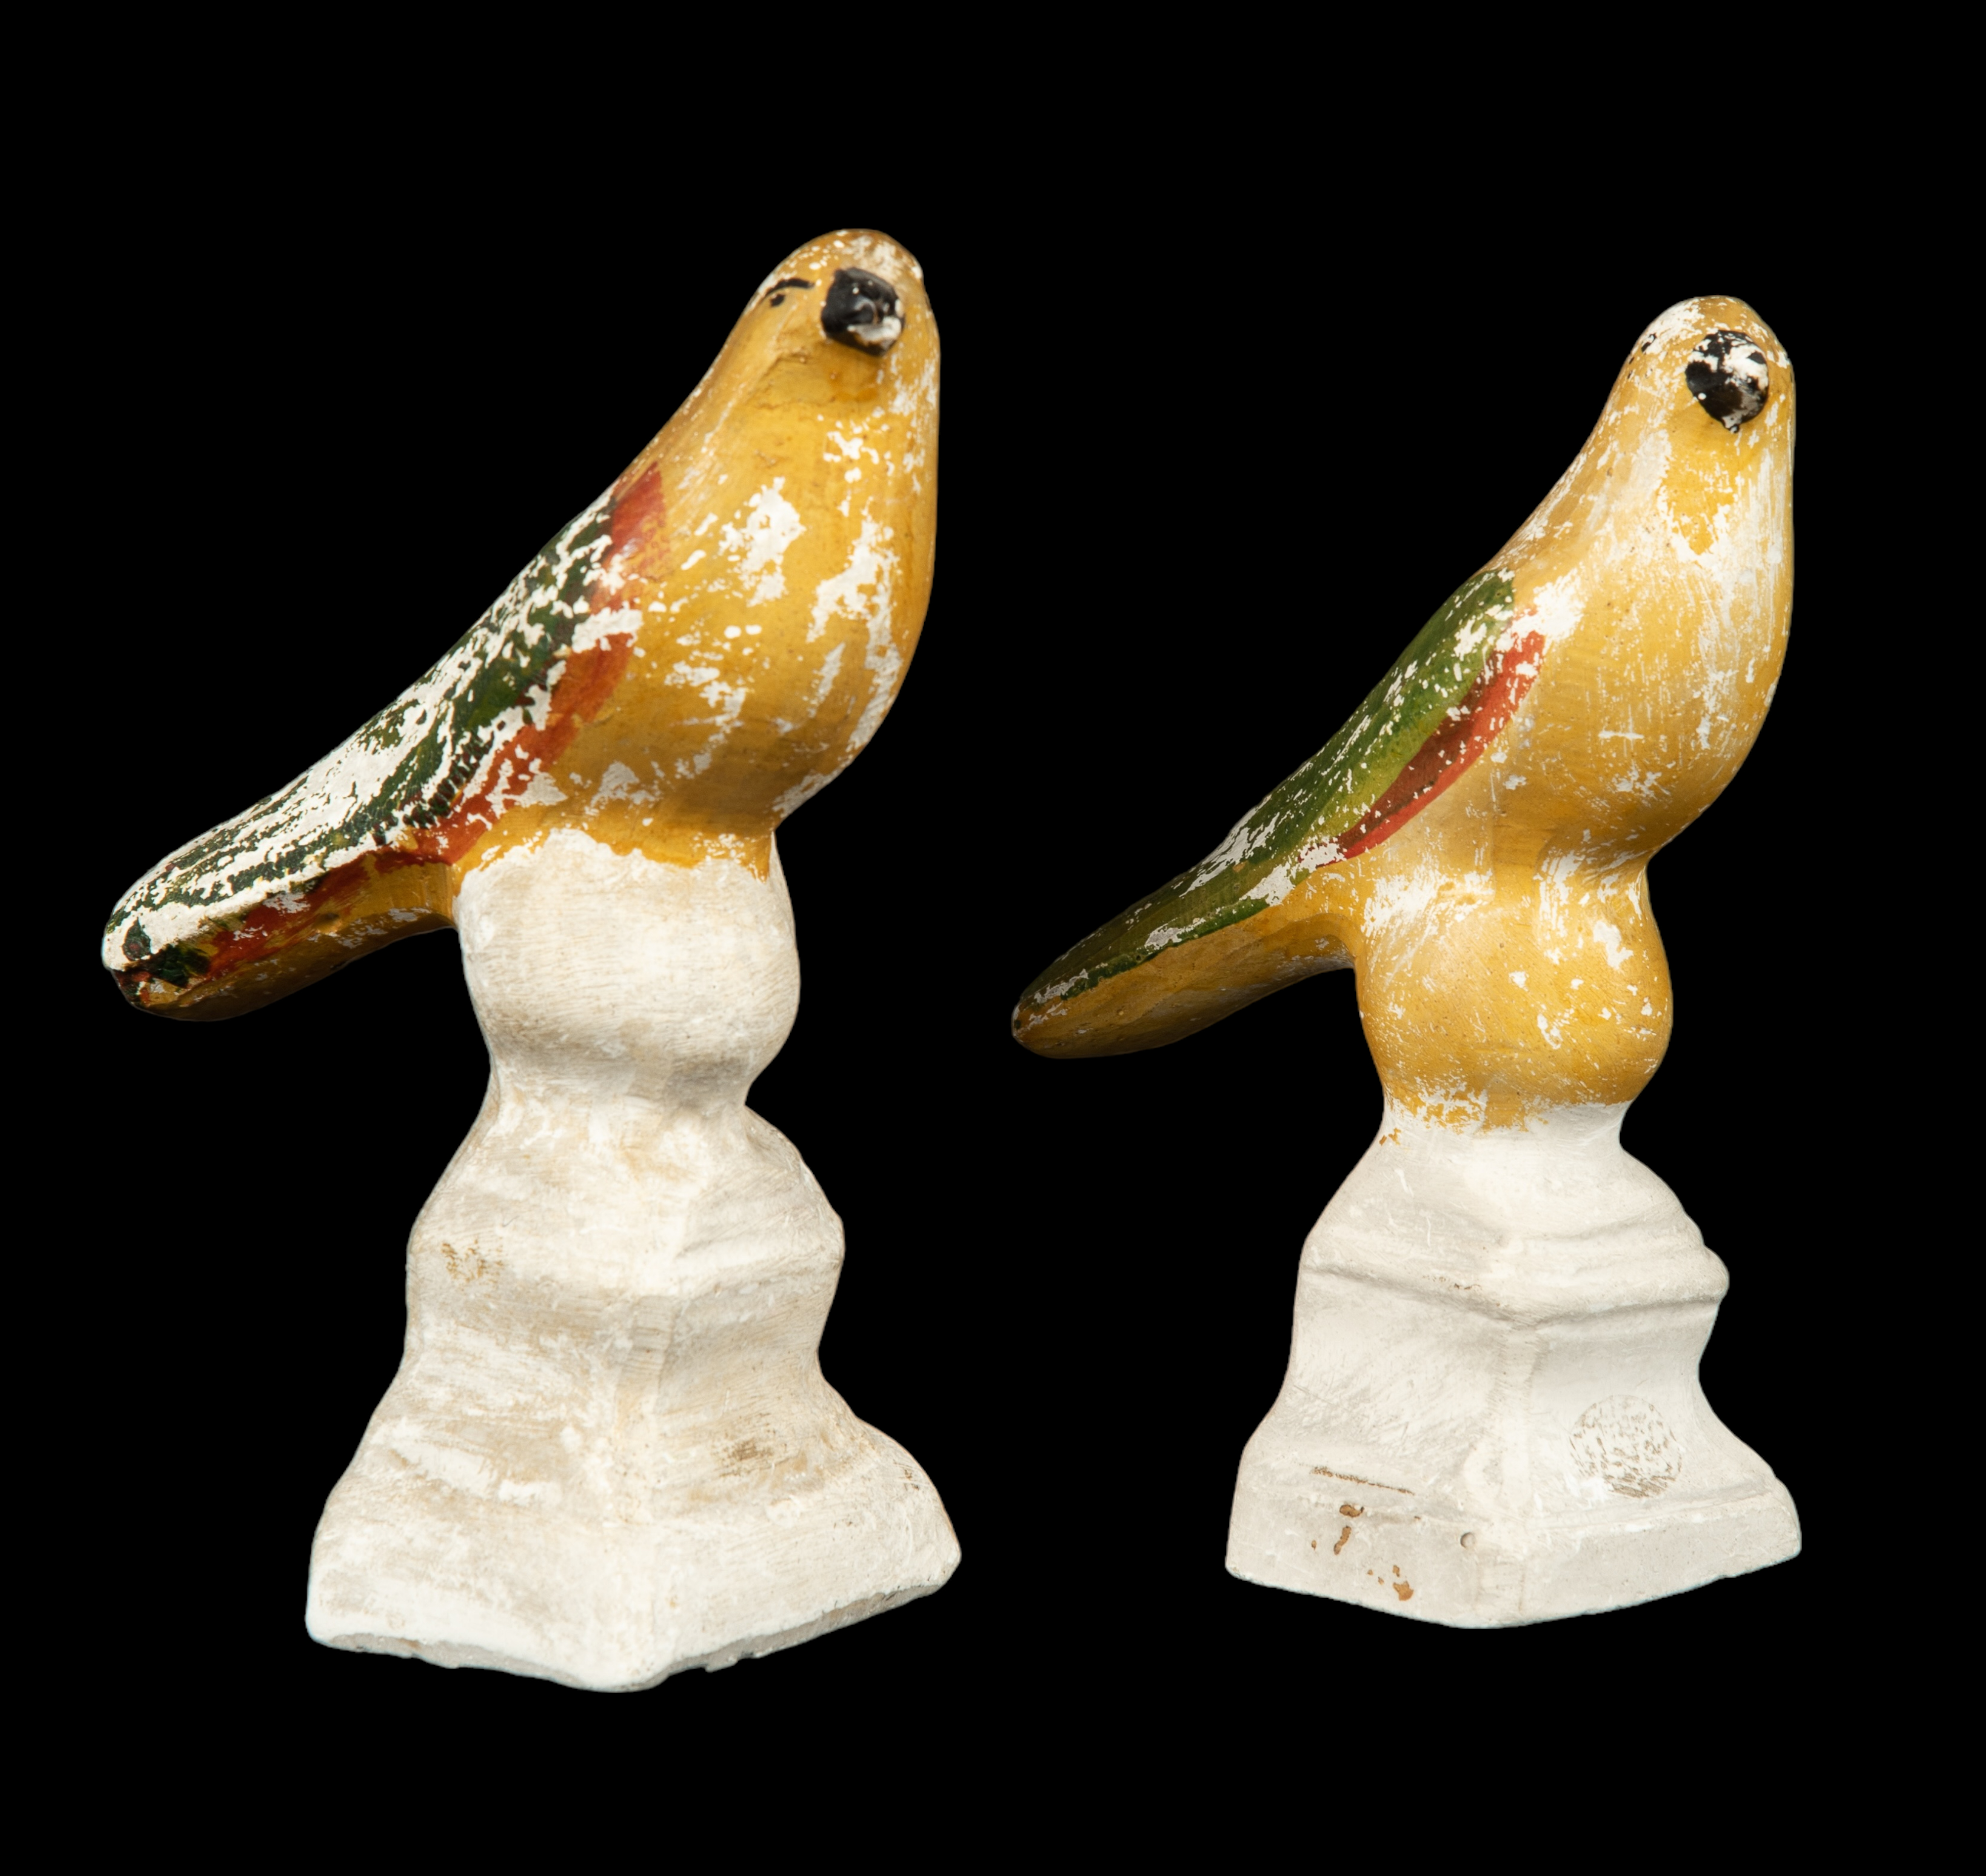 Pair of chalkware figurines songbirds 3b19d2